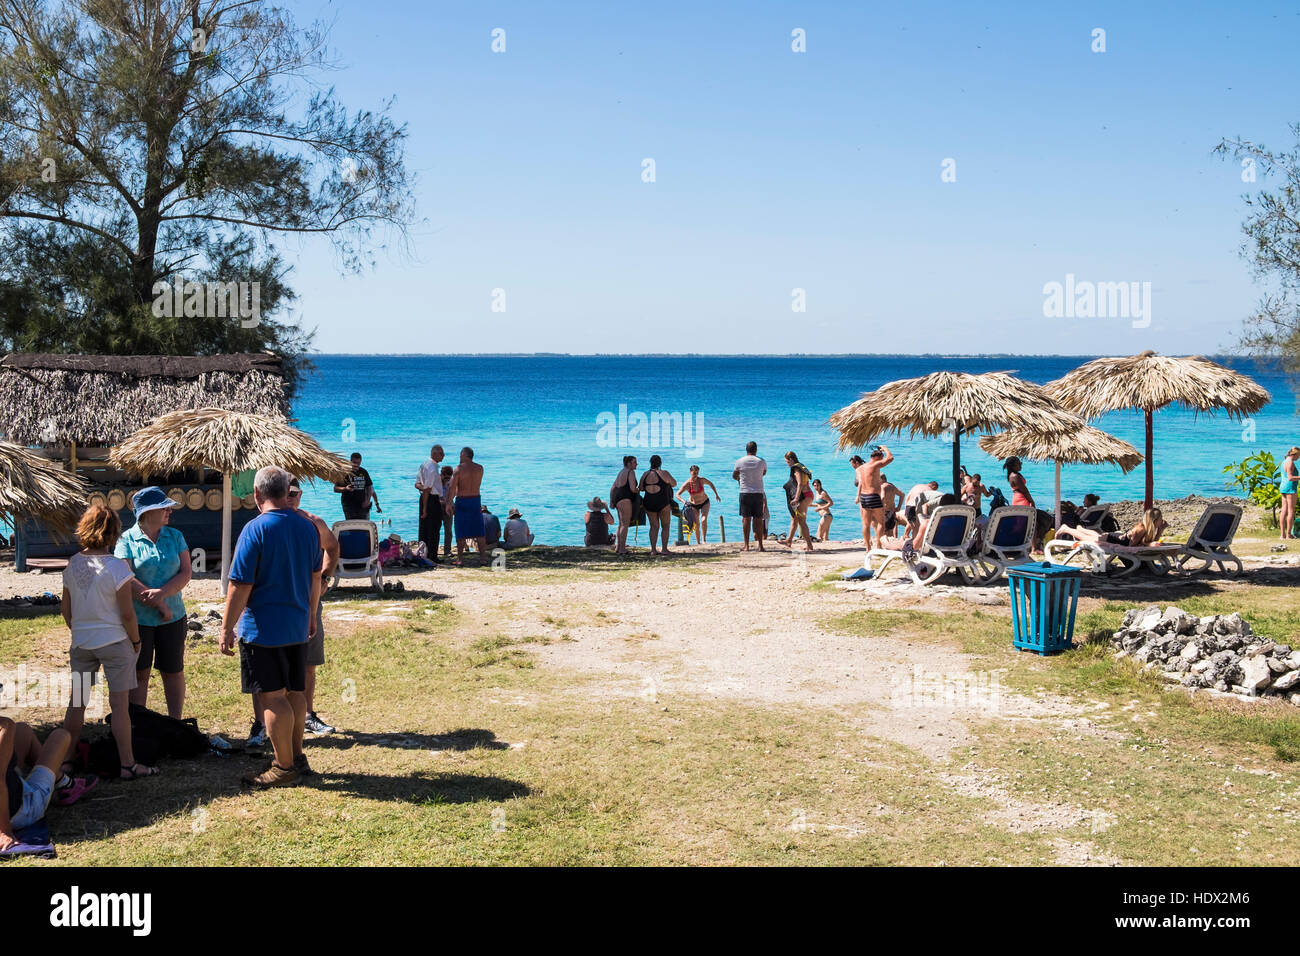 Nuotatori lungo la costa dei Caraibi a Playa Giron, Baia dei maiali, Cuba Foto Stock